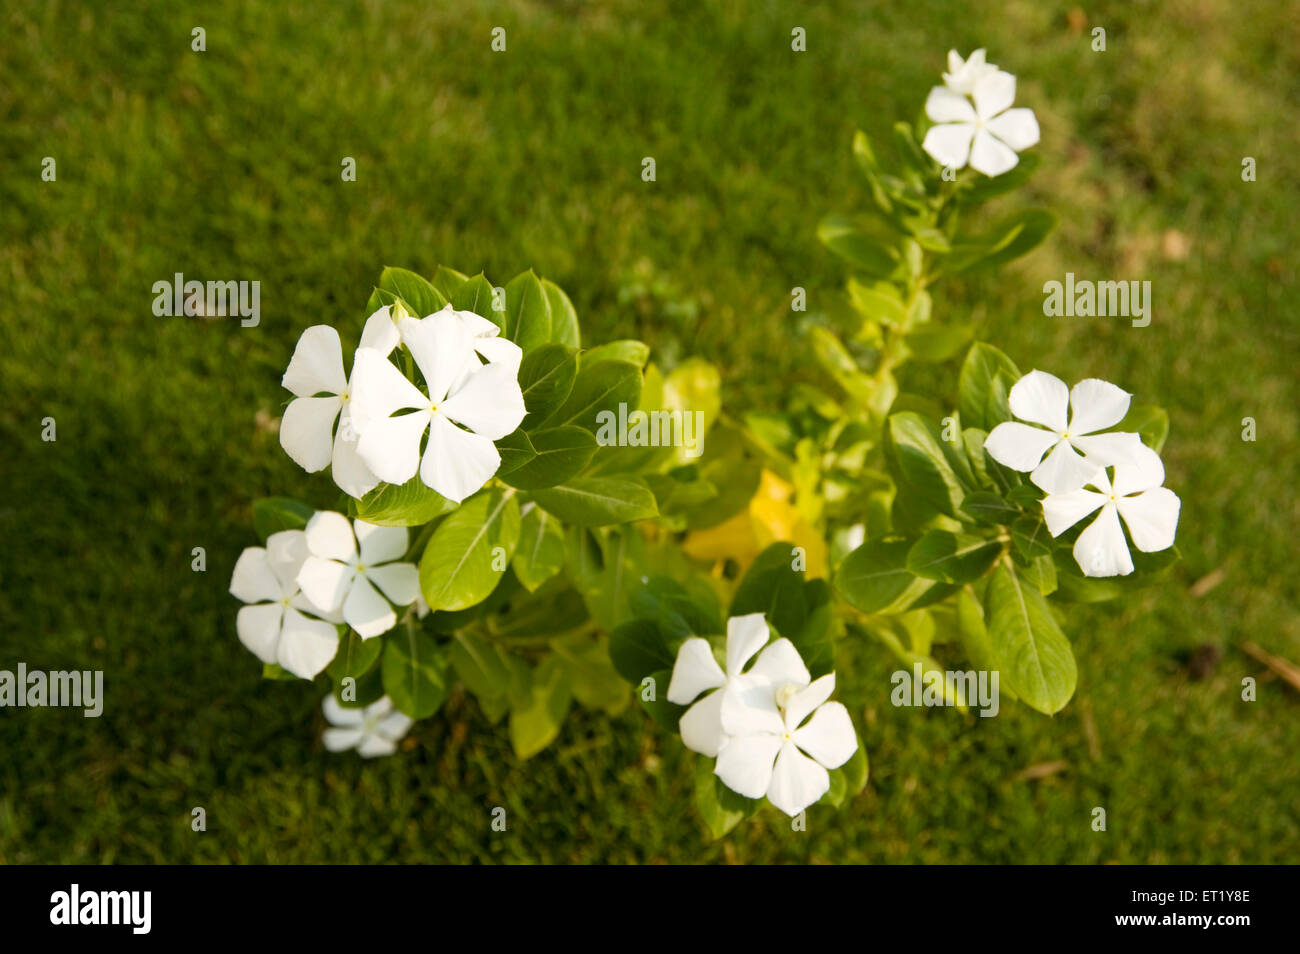 Creeping phlox, white flower, Phlox subulata, Phlox stolonifera, Polemoniaceae, Phlox family, India, Asia Stock Photo